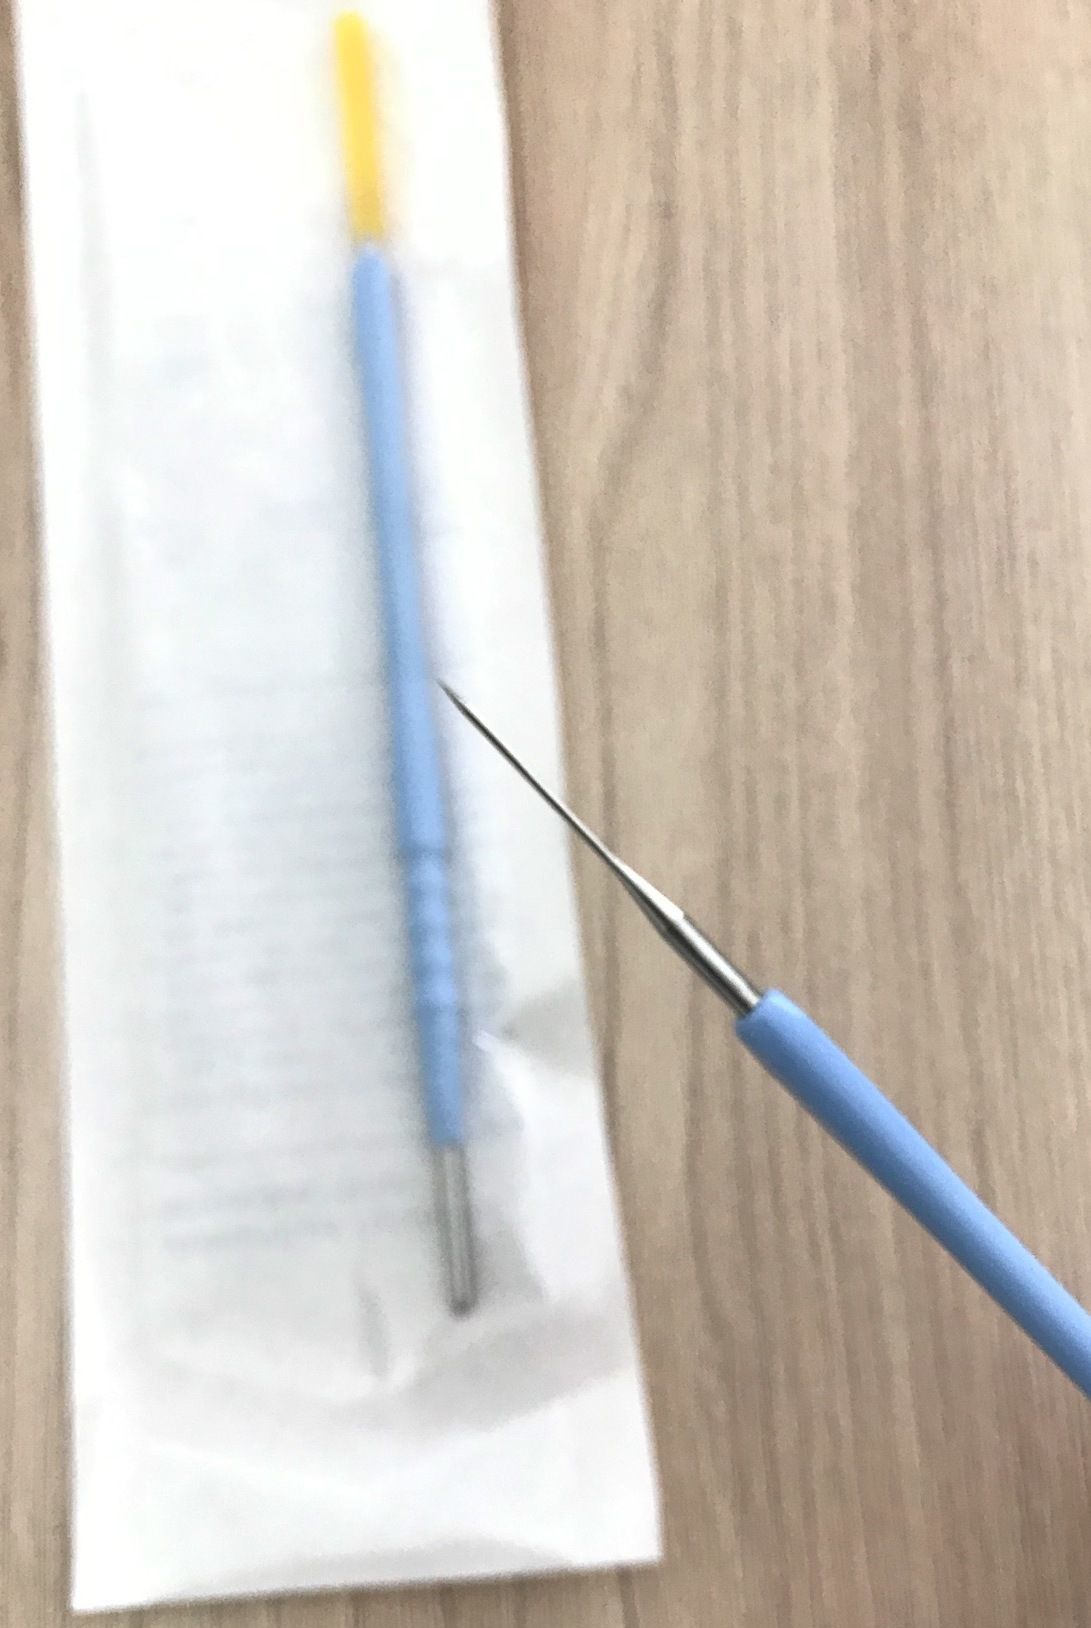 ESU Electrode long needle tip ESU Pencil long needle tip_ปลายด้ามจี้ผ่าตัดโมโนโพล่าร์แบบปลายแหลมยาวใบมีดจี้ไฟฟ้าเครื่องจี้ผ่าตัดแบบปลายเข็มปลายแหลมยาว